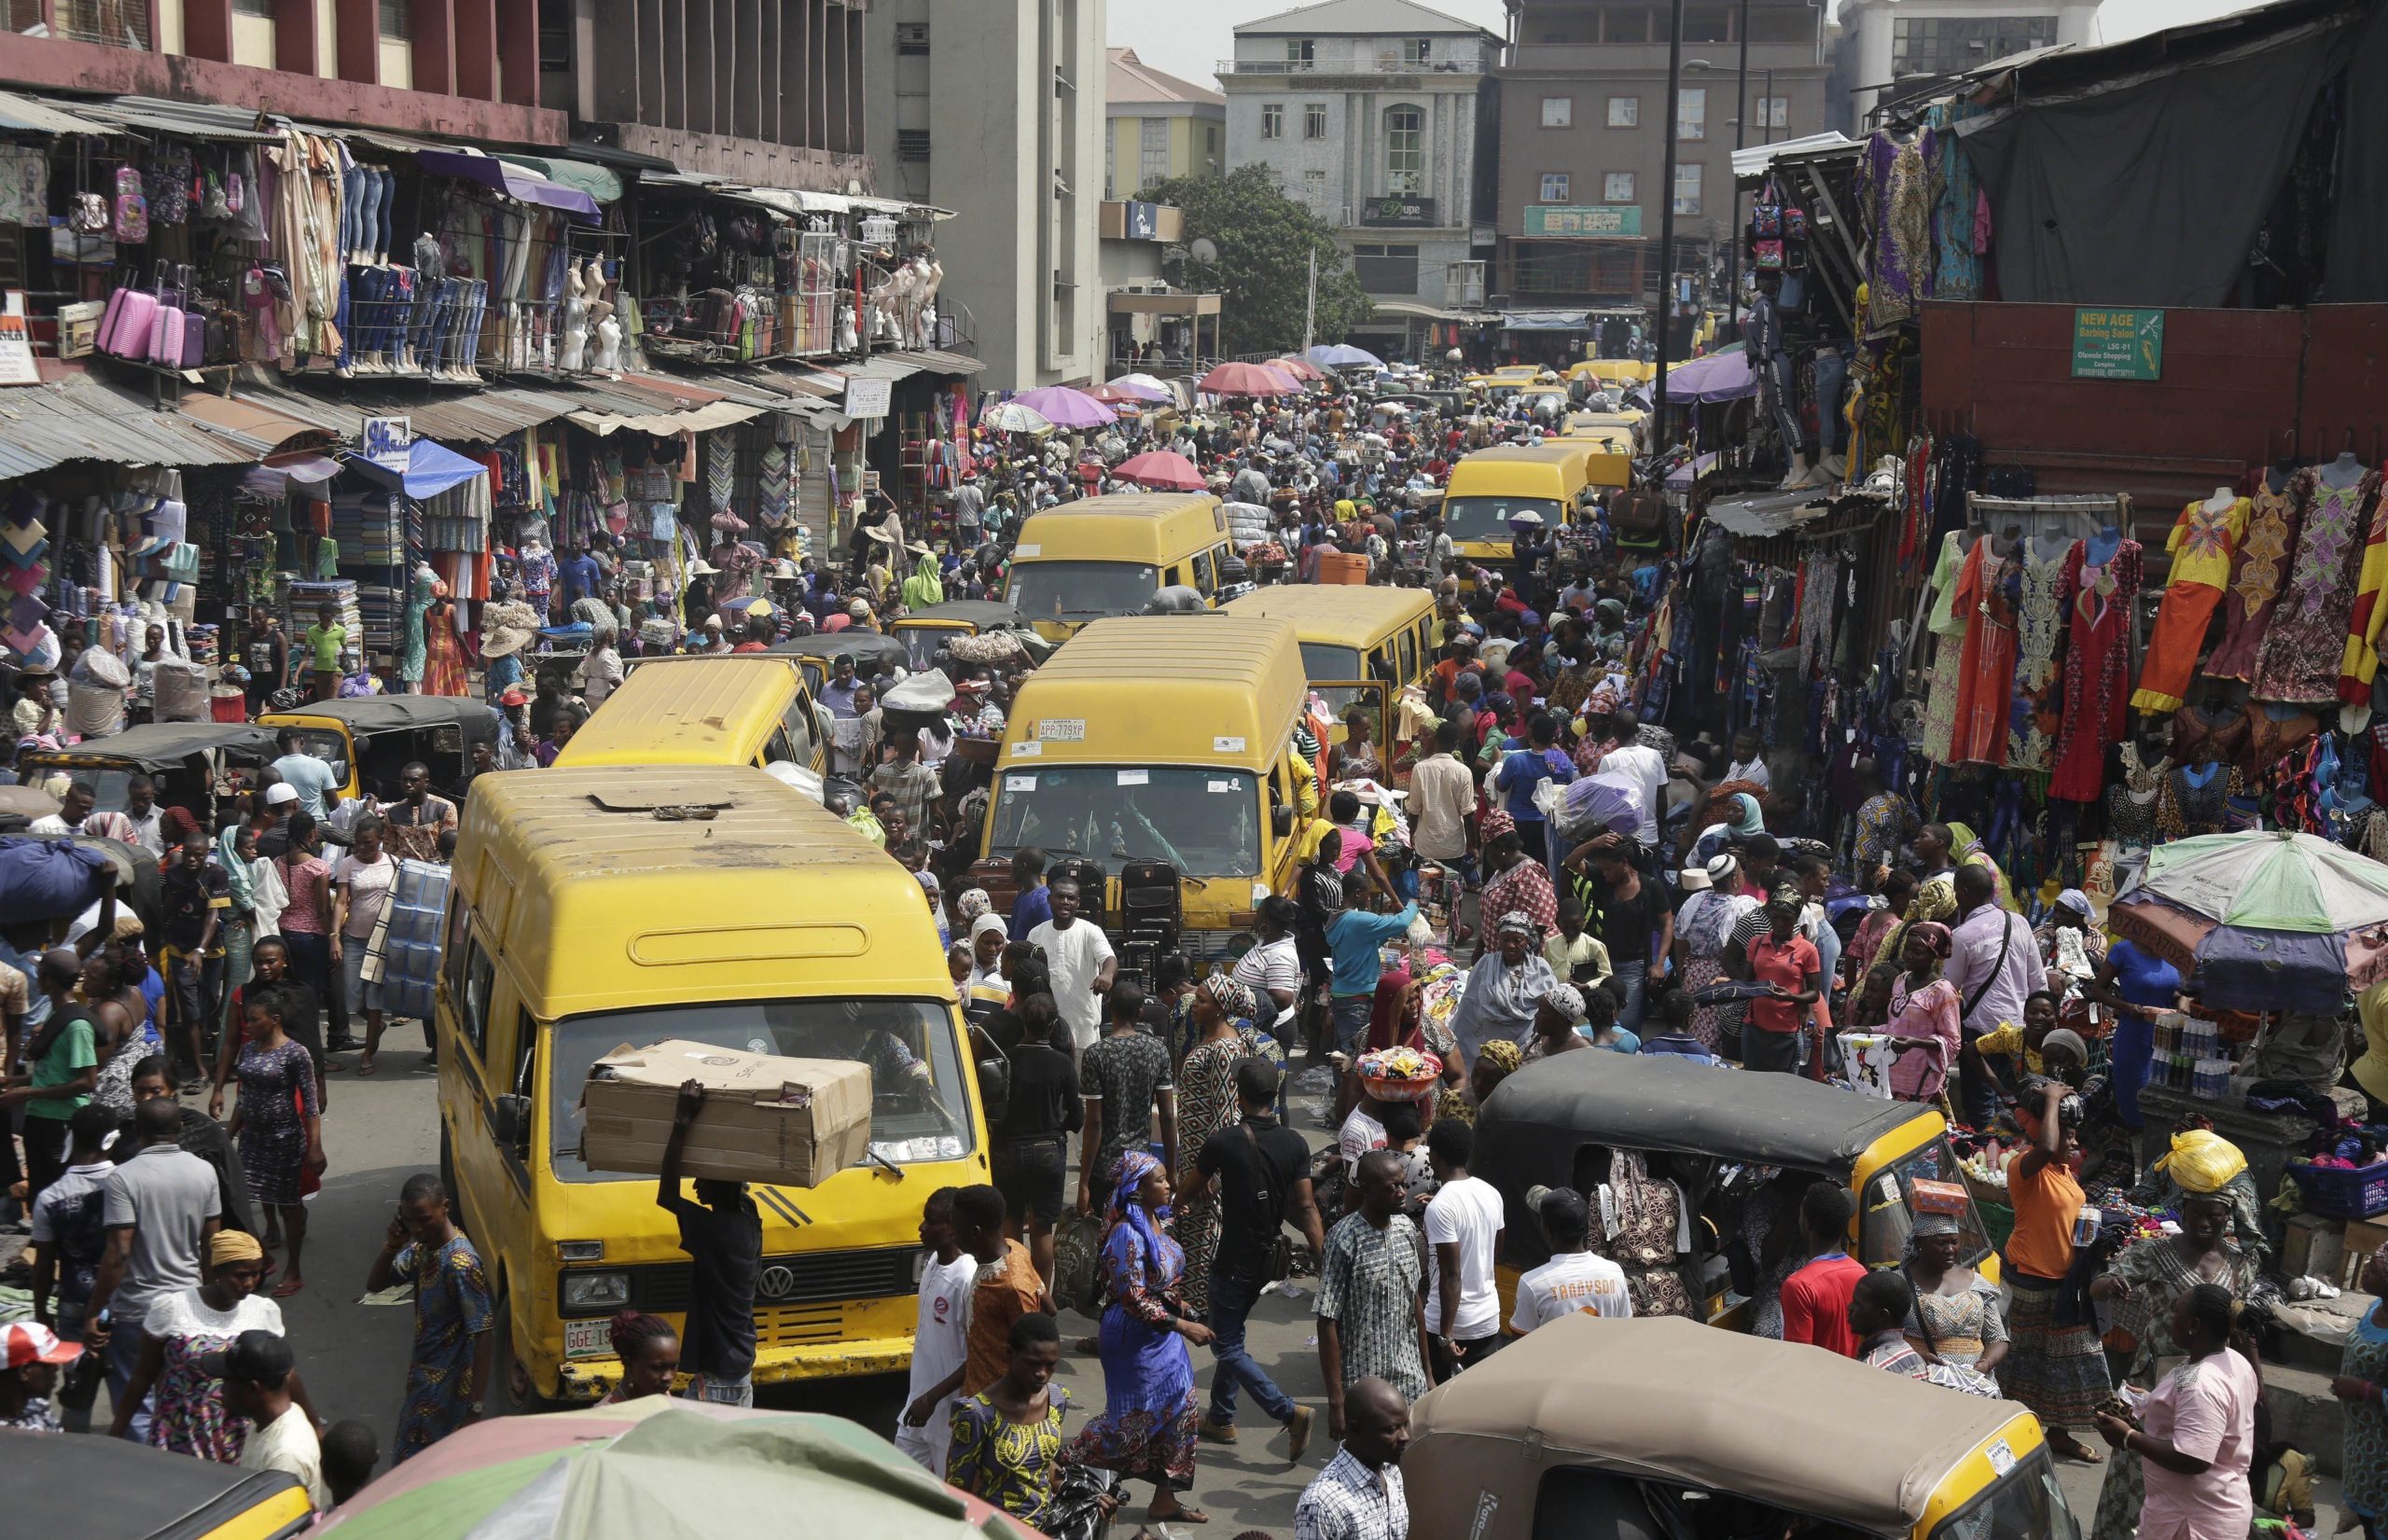 pedestrians-shop-in-balogun-market-in-lagos-nigeria-on-dec-23-photo-sunday-alambaassociated-press